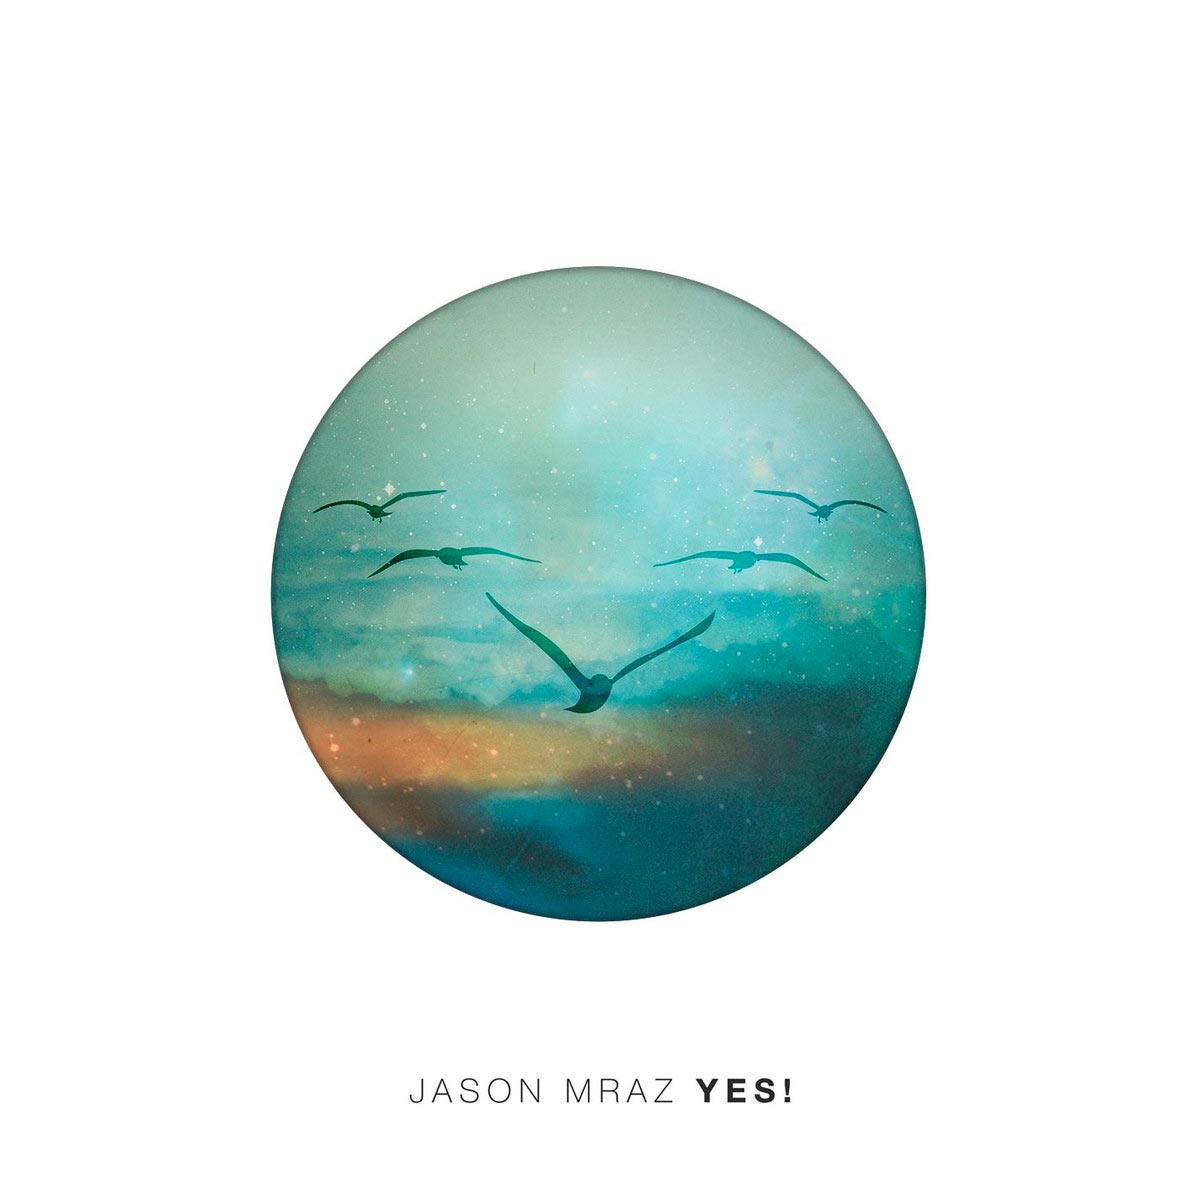 Jason Mraz: Yes!, la portada del disco